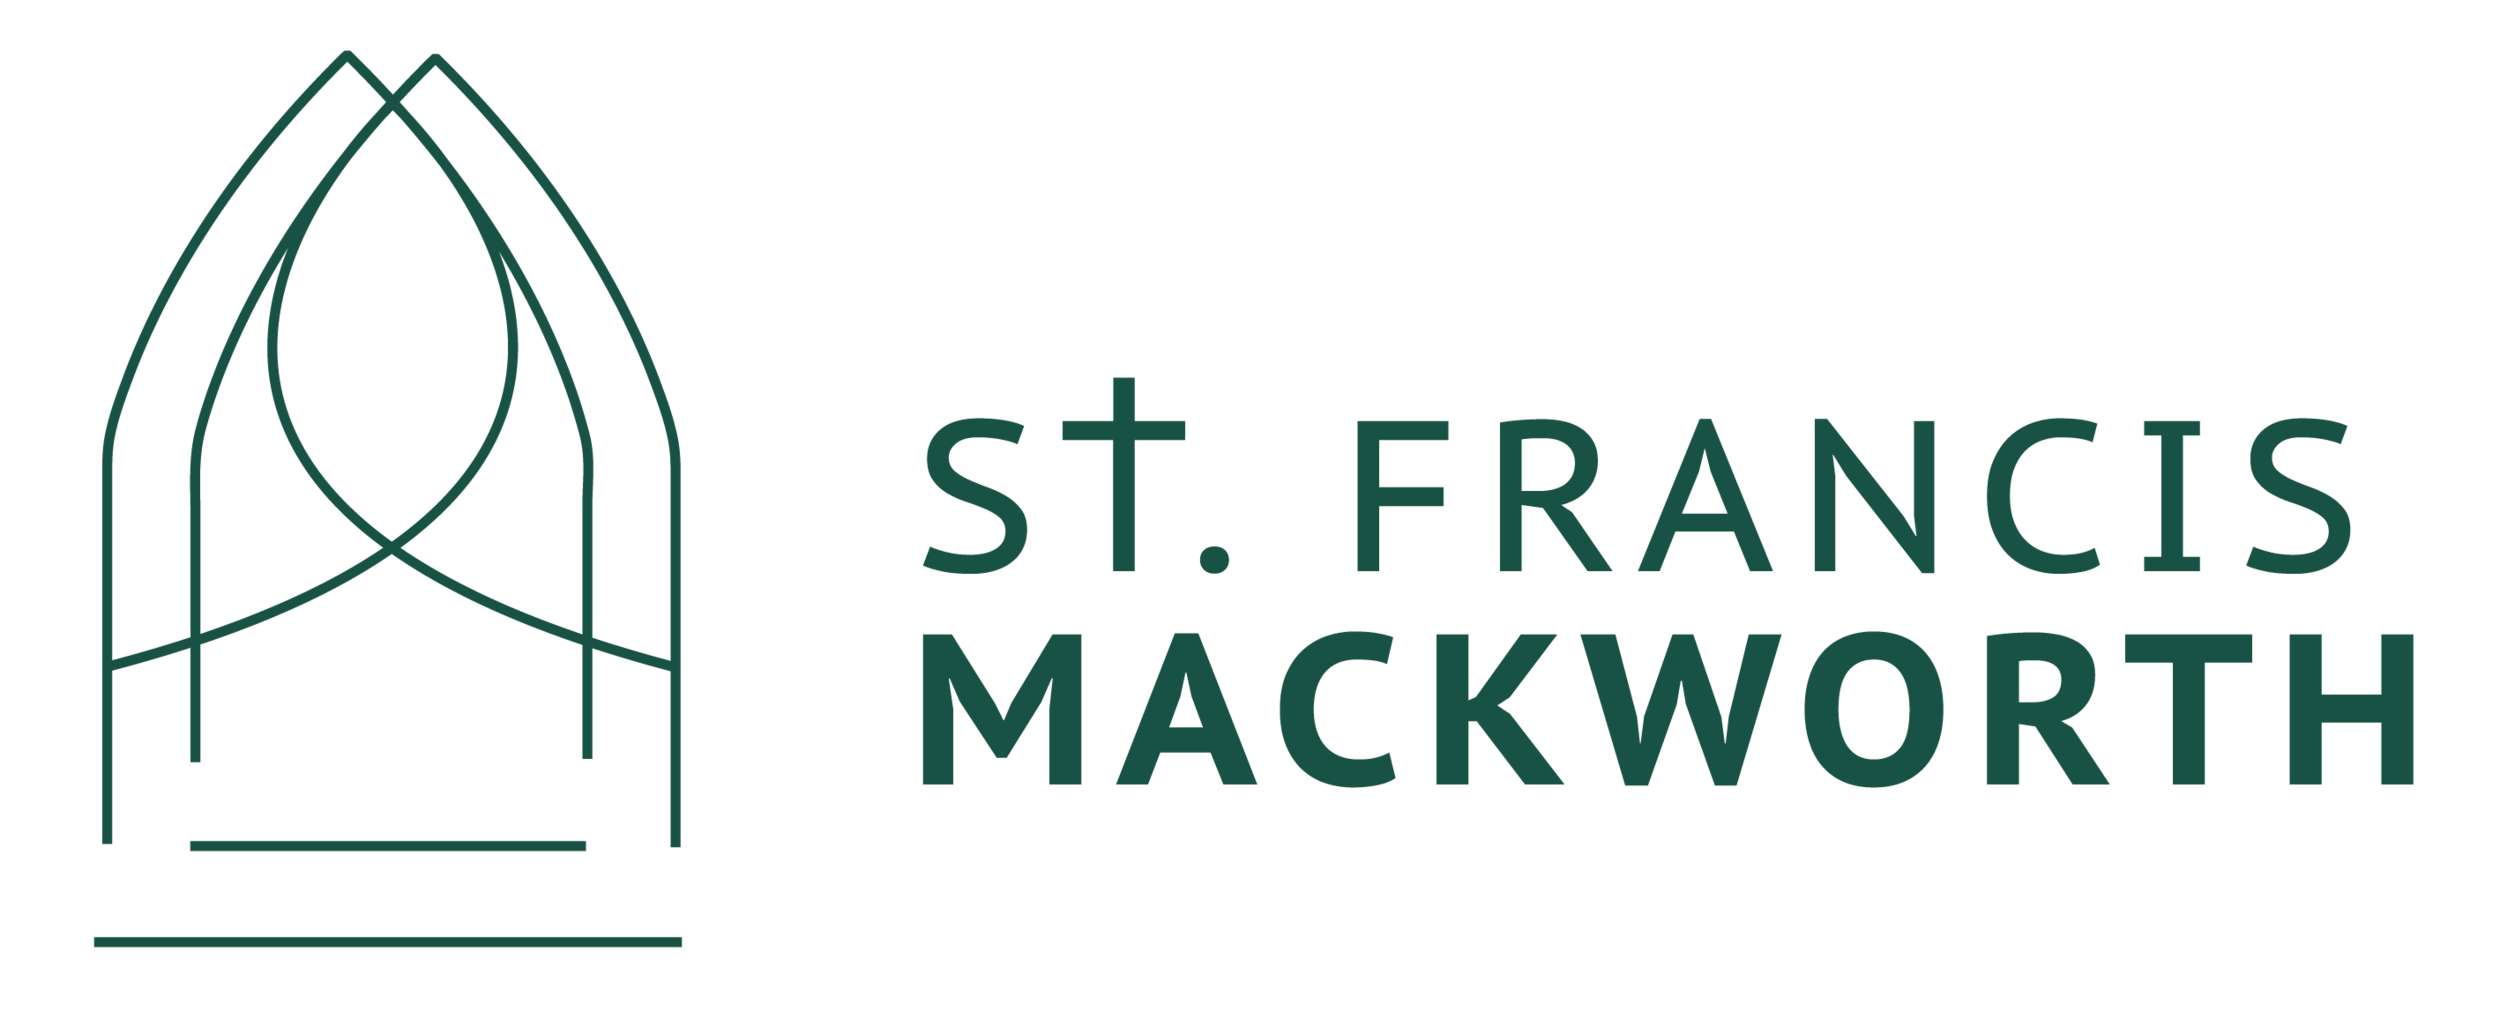 St. Francis Mackworth